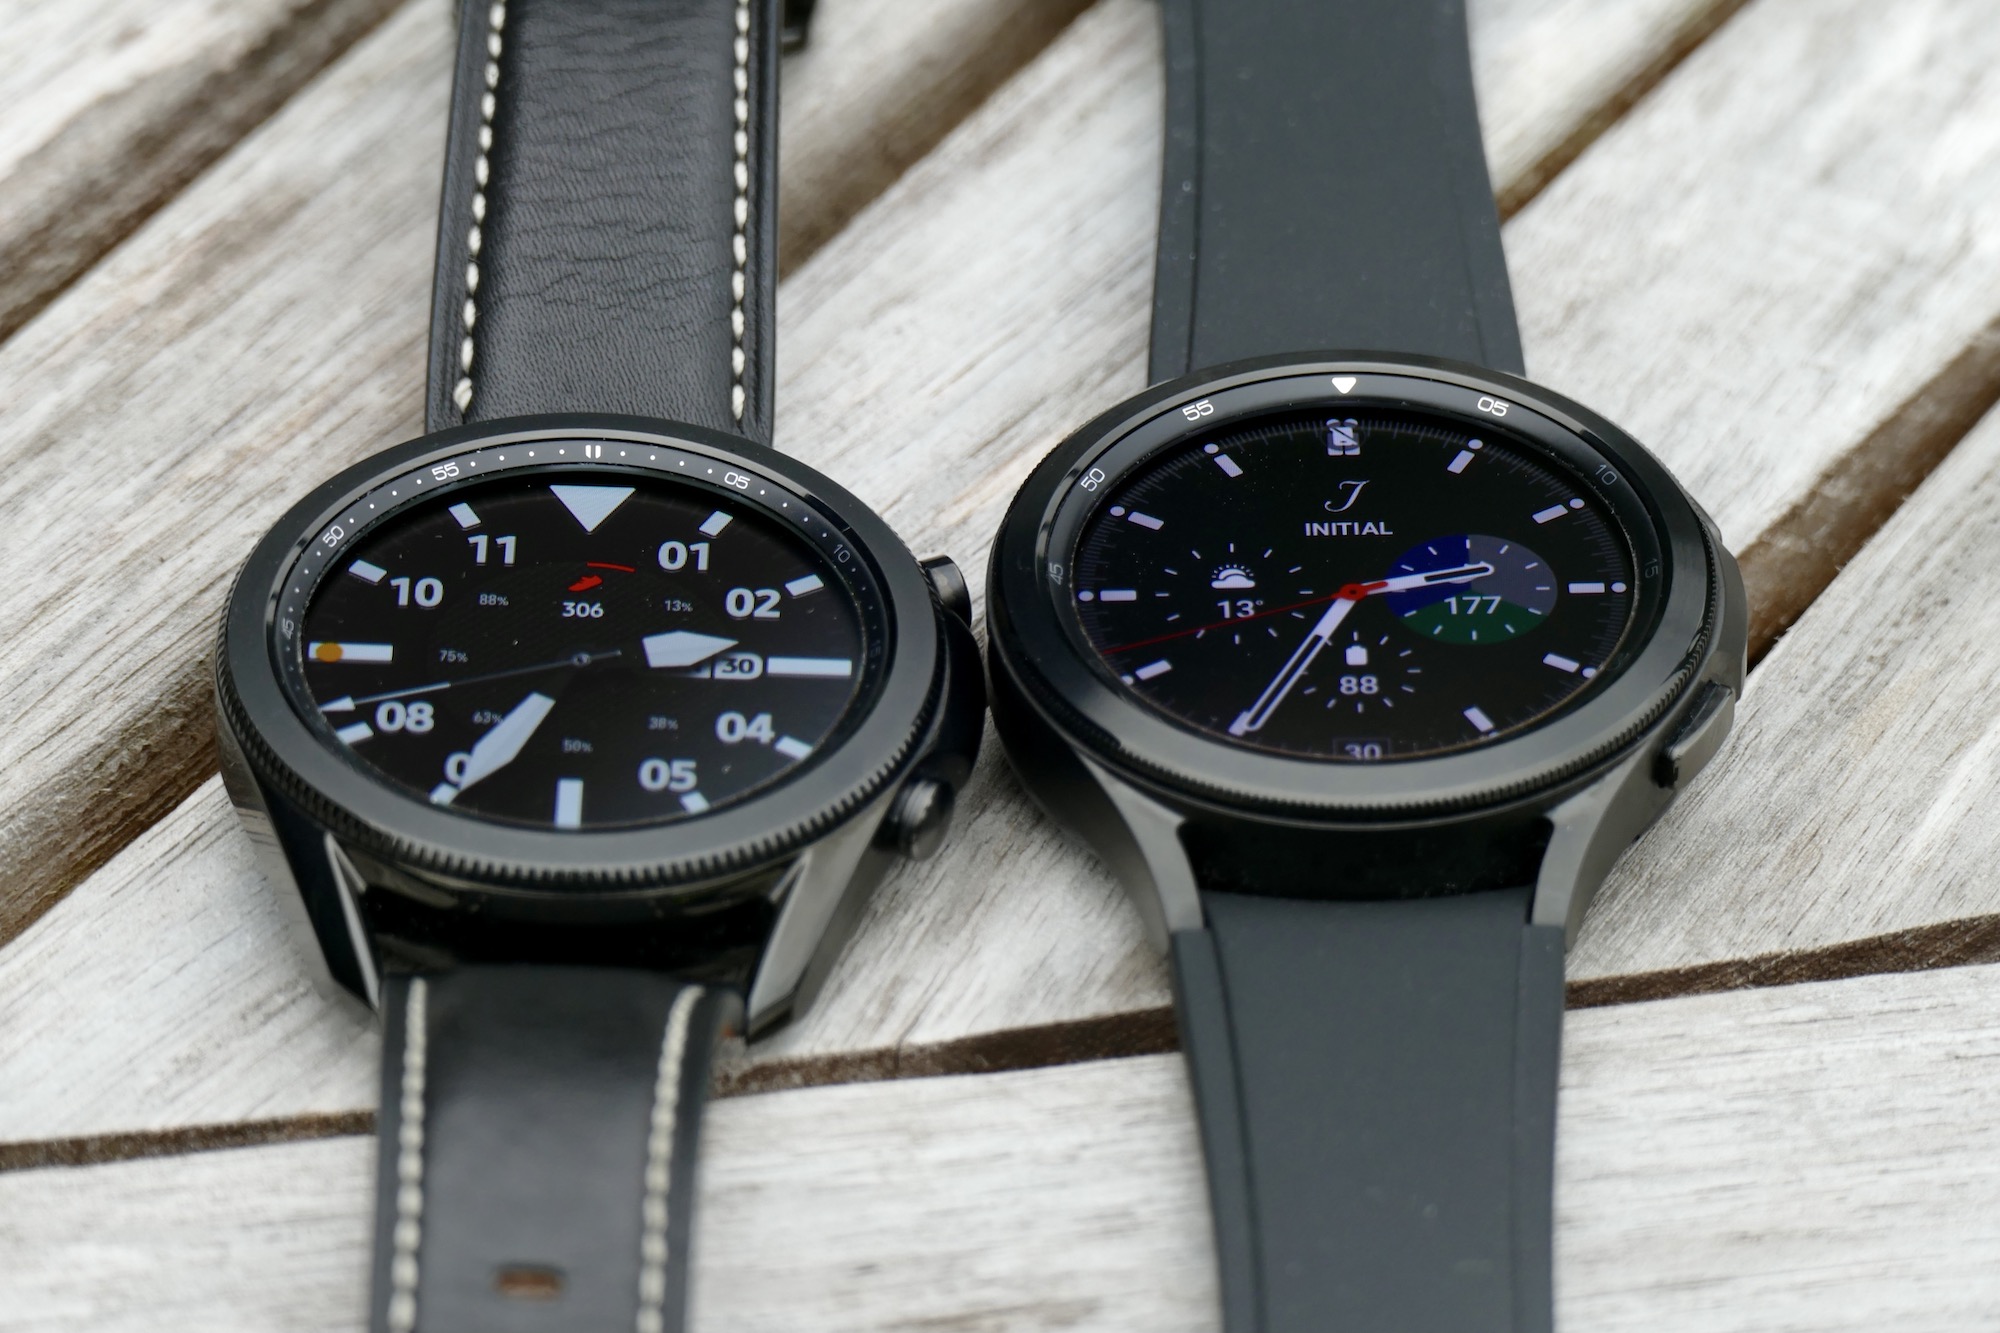 Samsung Galaxy Watch 4 (Classic) vs Watch 3: What's new?